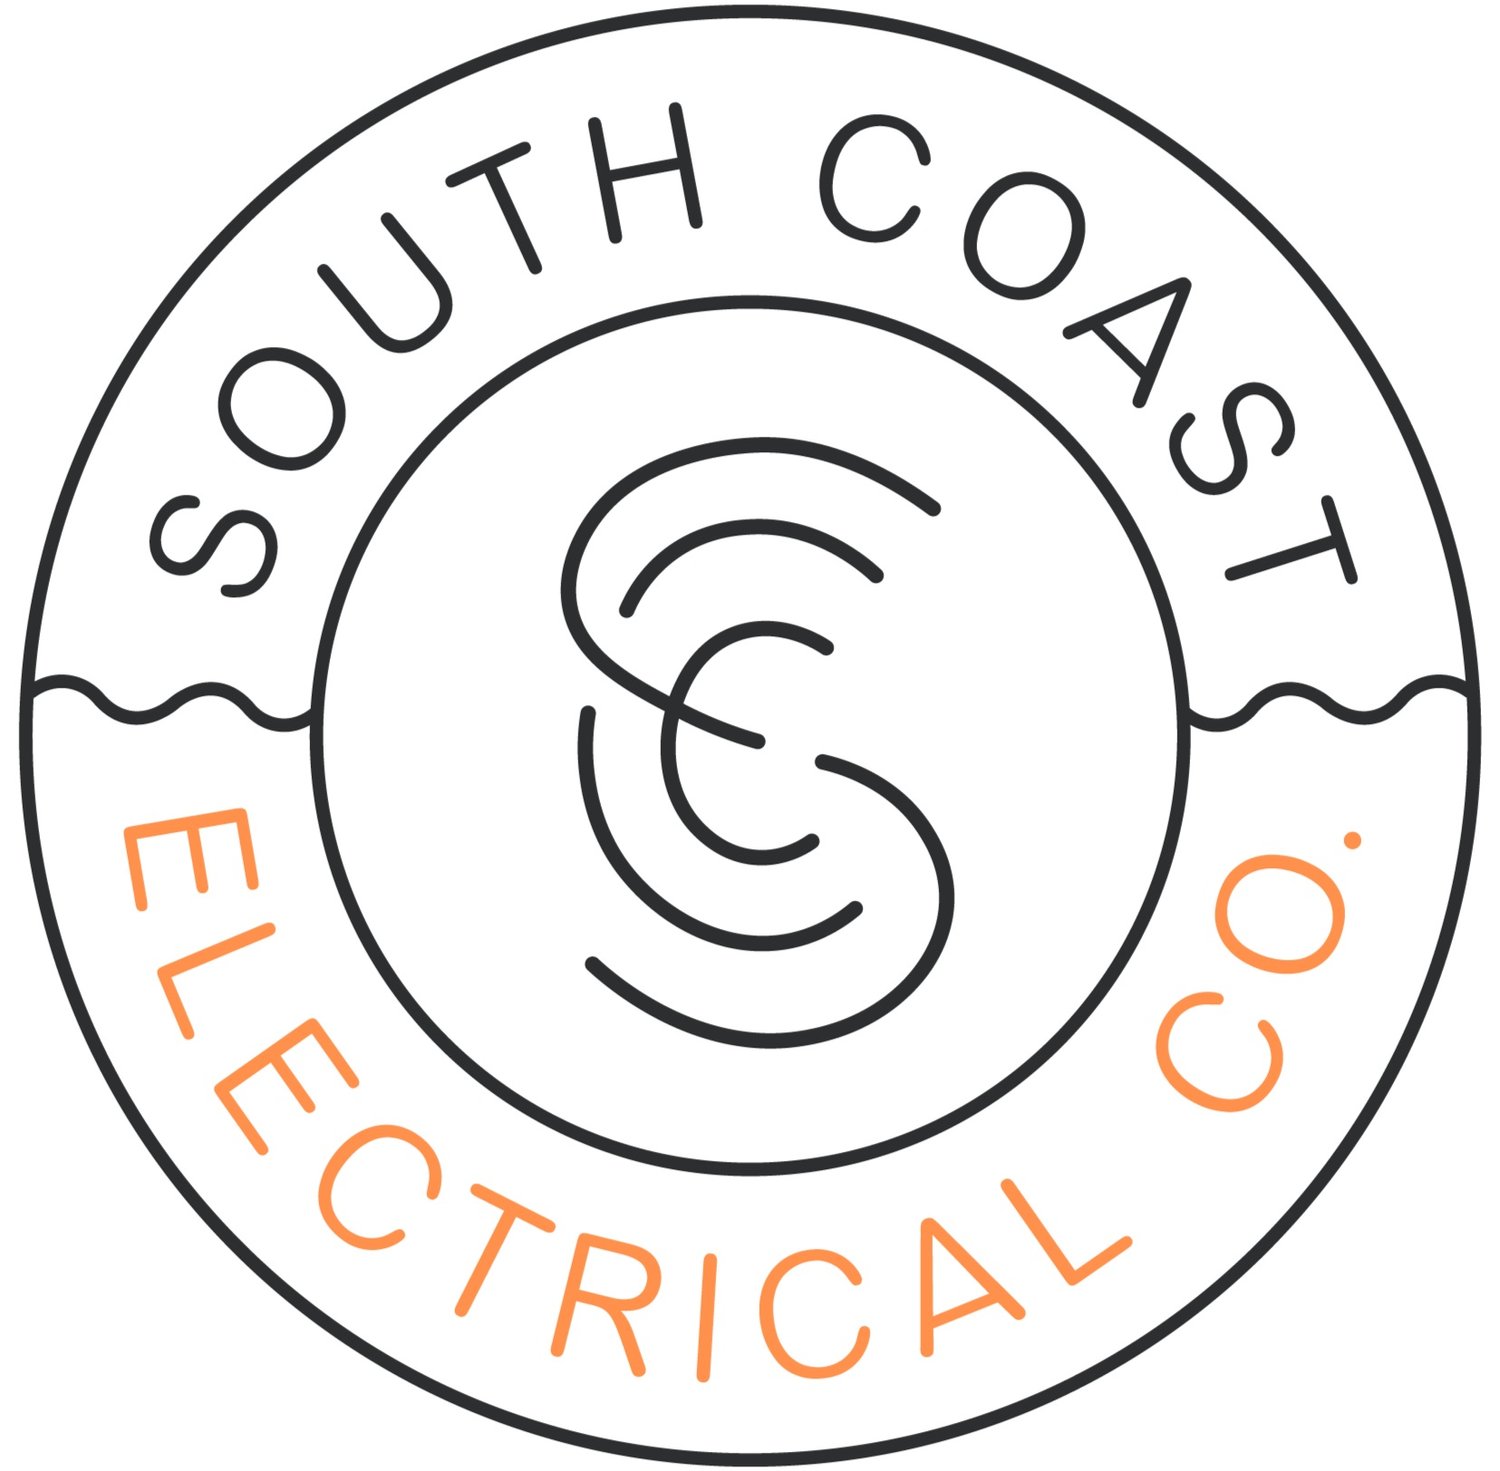 South Coast Electrical Co